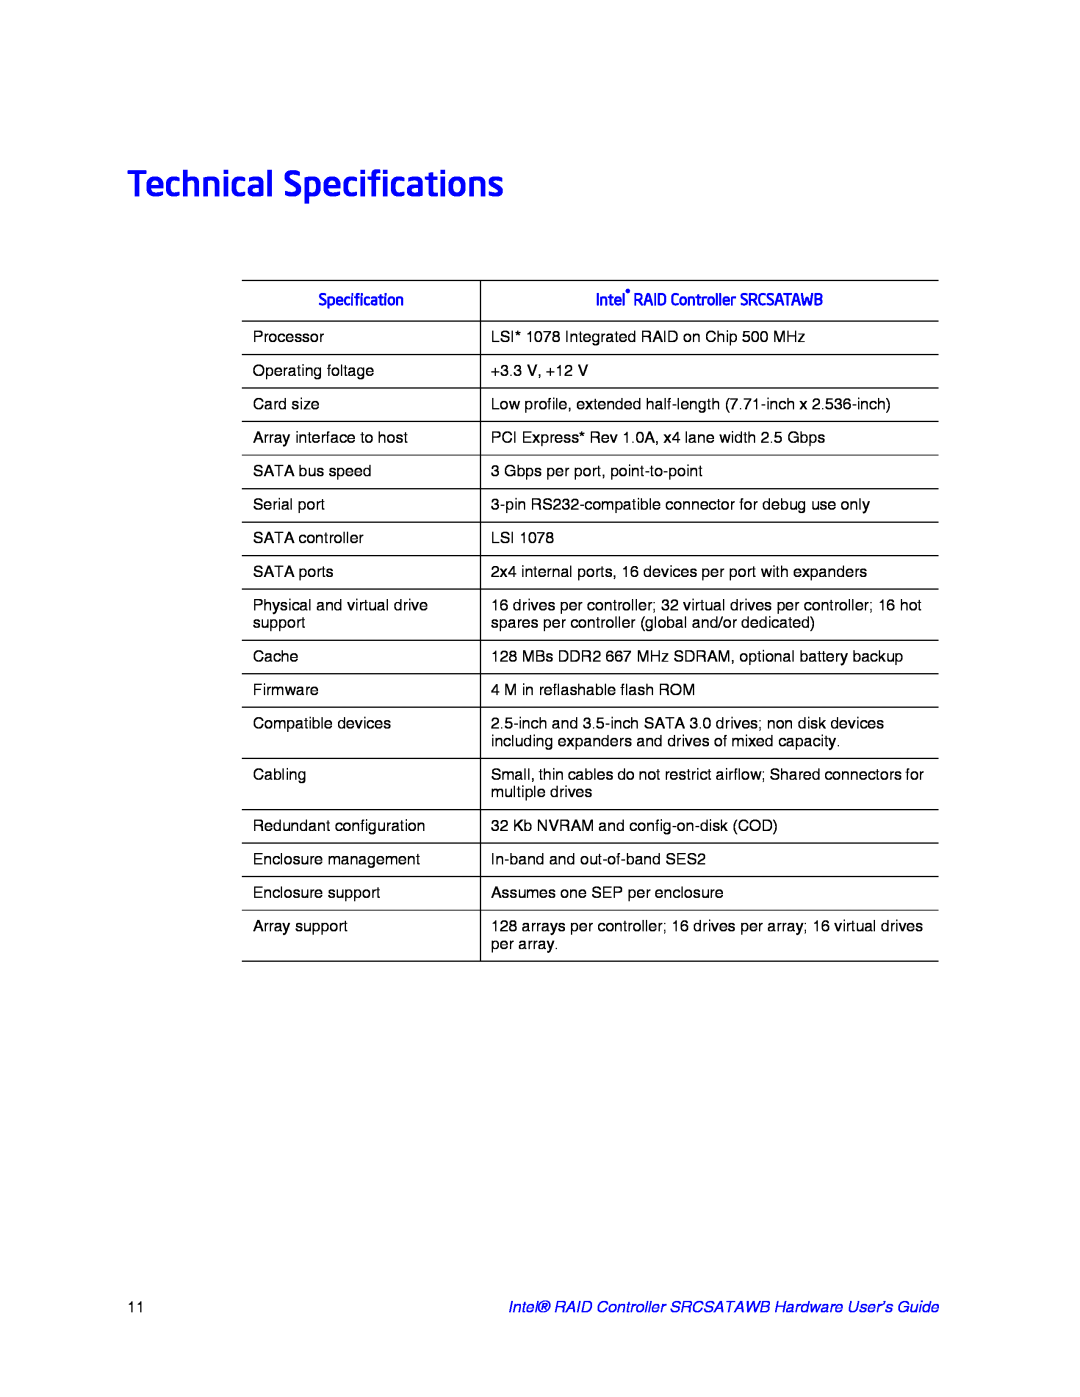 Intel manual Technical Specifications, Intel RAID Controller SRCSATAWB 